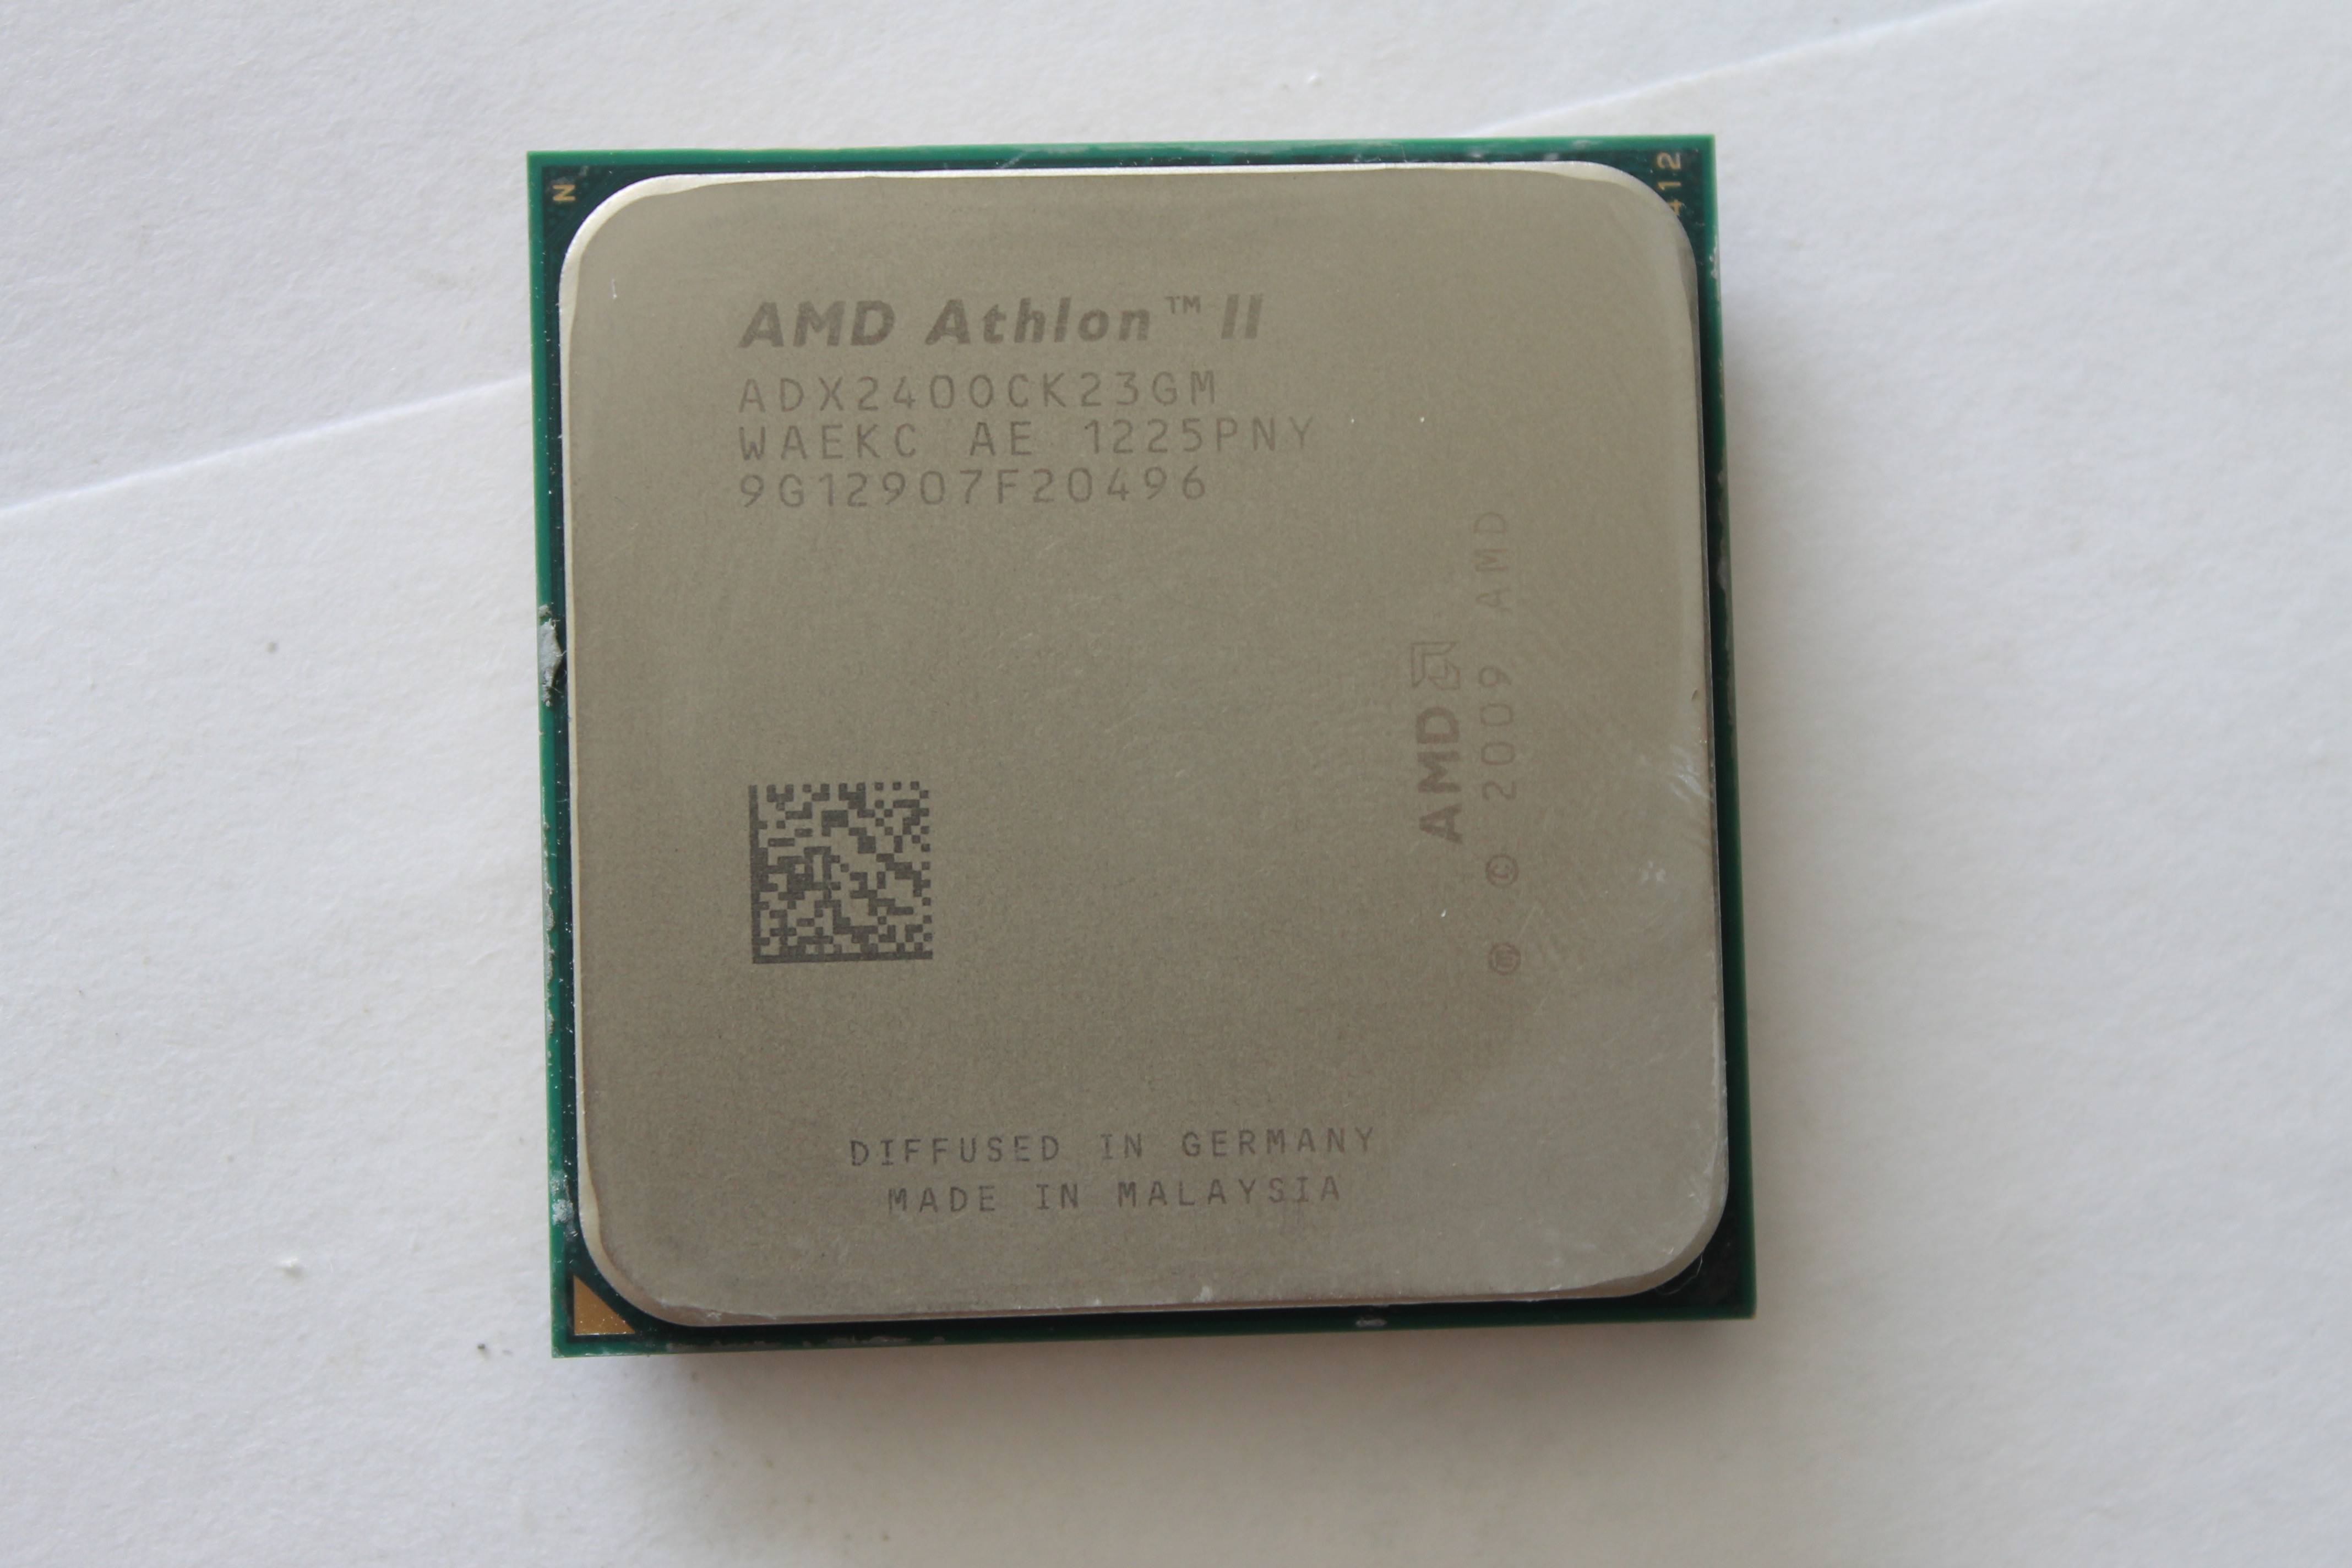 Сокет атлон. Процессор: Core i5 3470 / AMD Athlon 240ge. Процессор AMD Athlon II x2 245, adx245ock23gm, 2.90ГГЦ, 2мб, Socket am3, OEM. AMD Athlon 2 x2 265 Processor 3.30. AMD Athlon 64 x2 кулер для процессора.